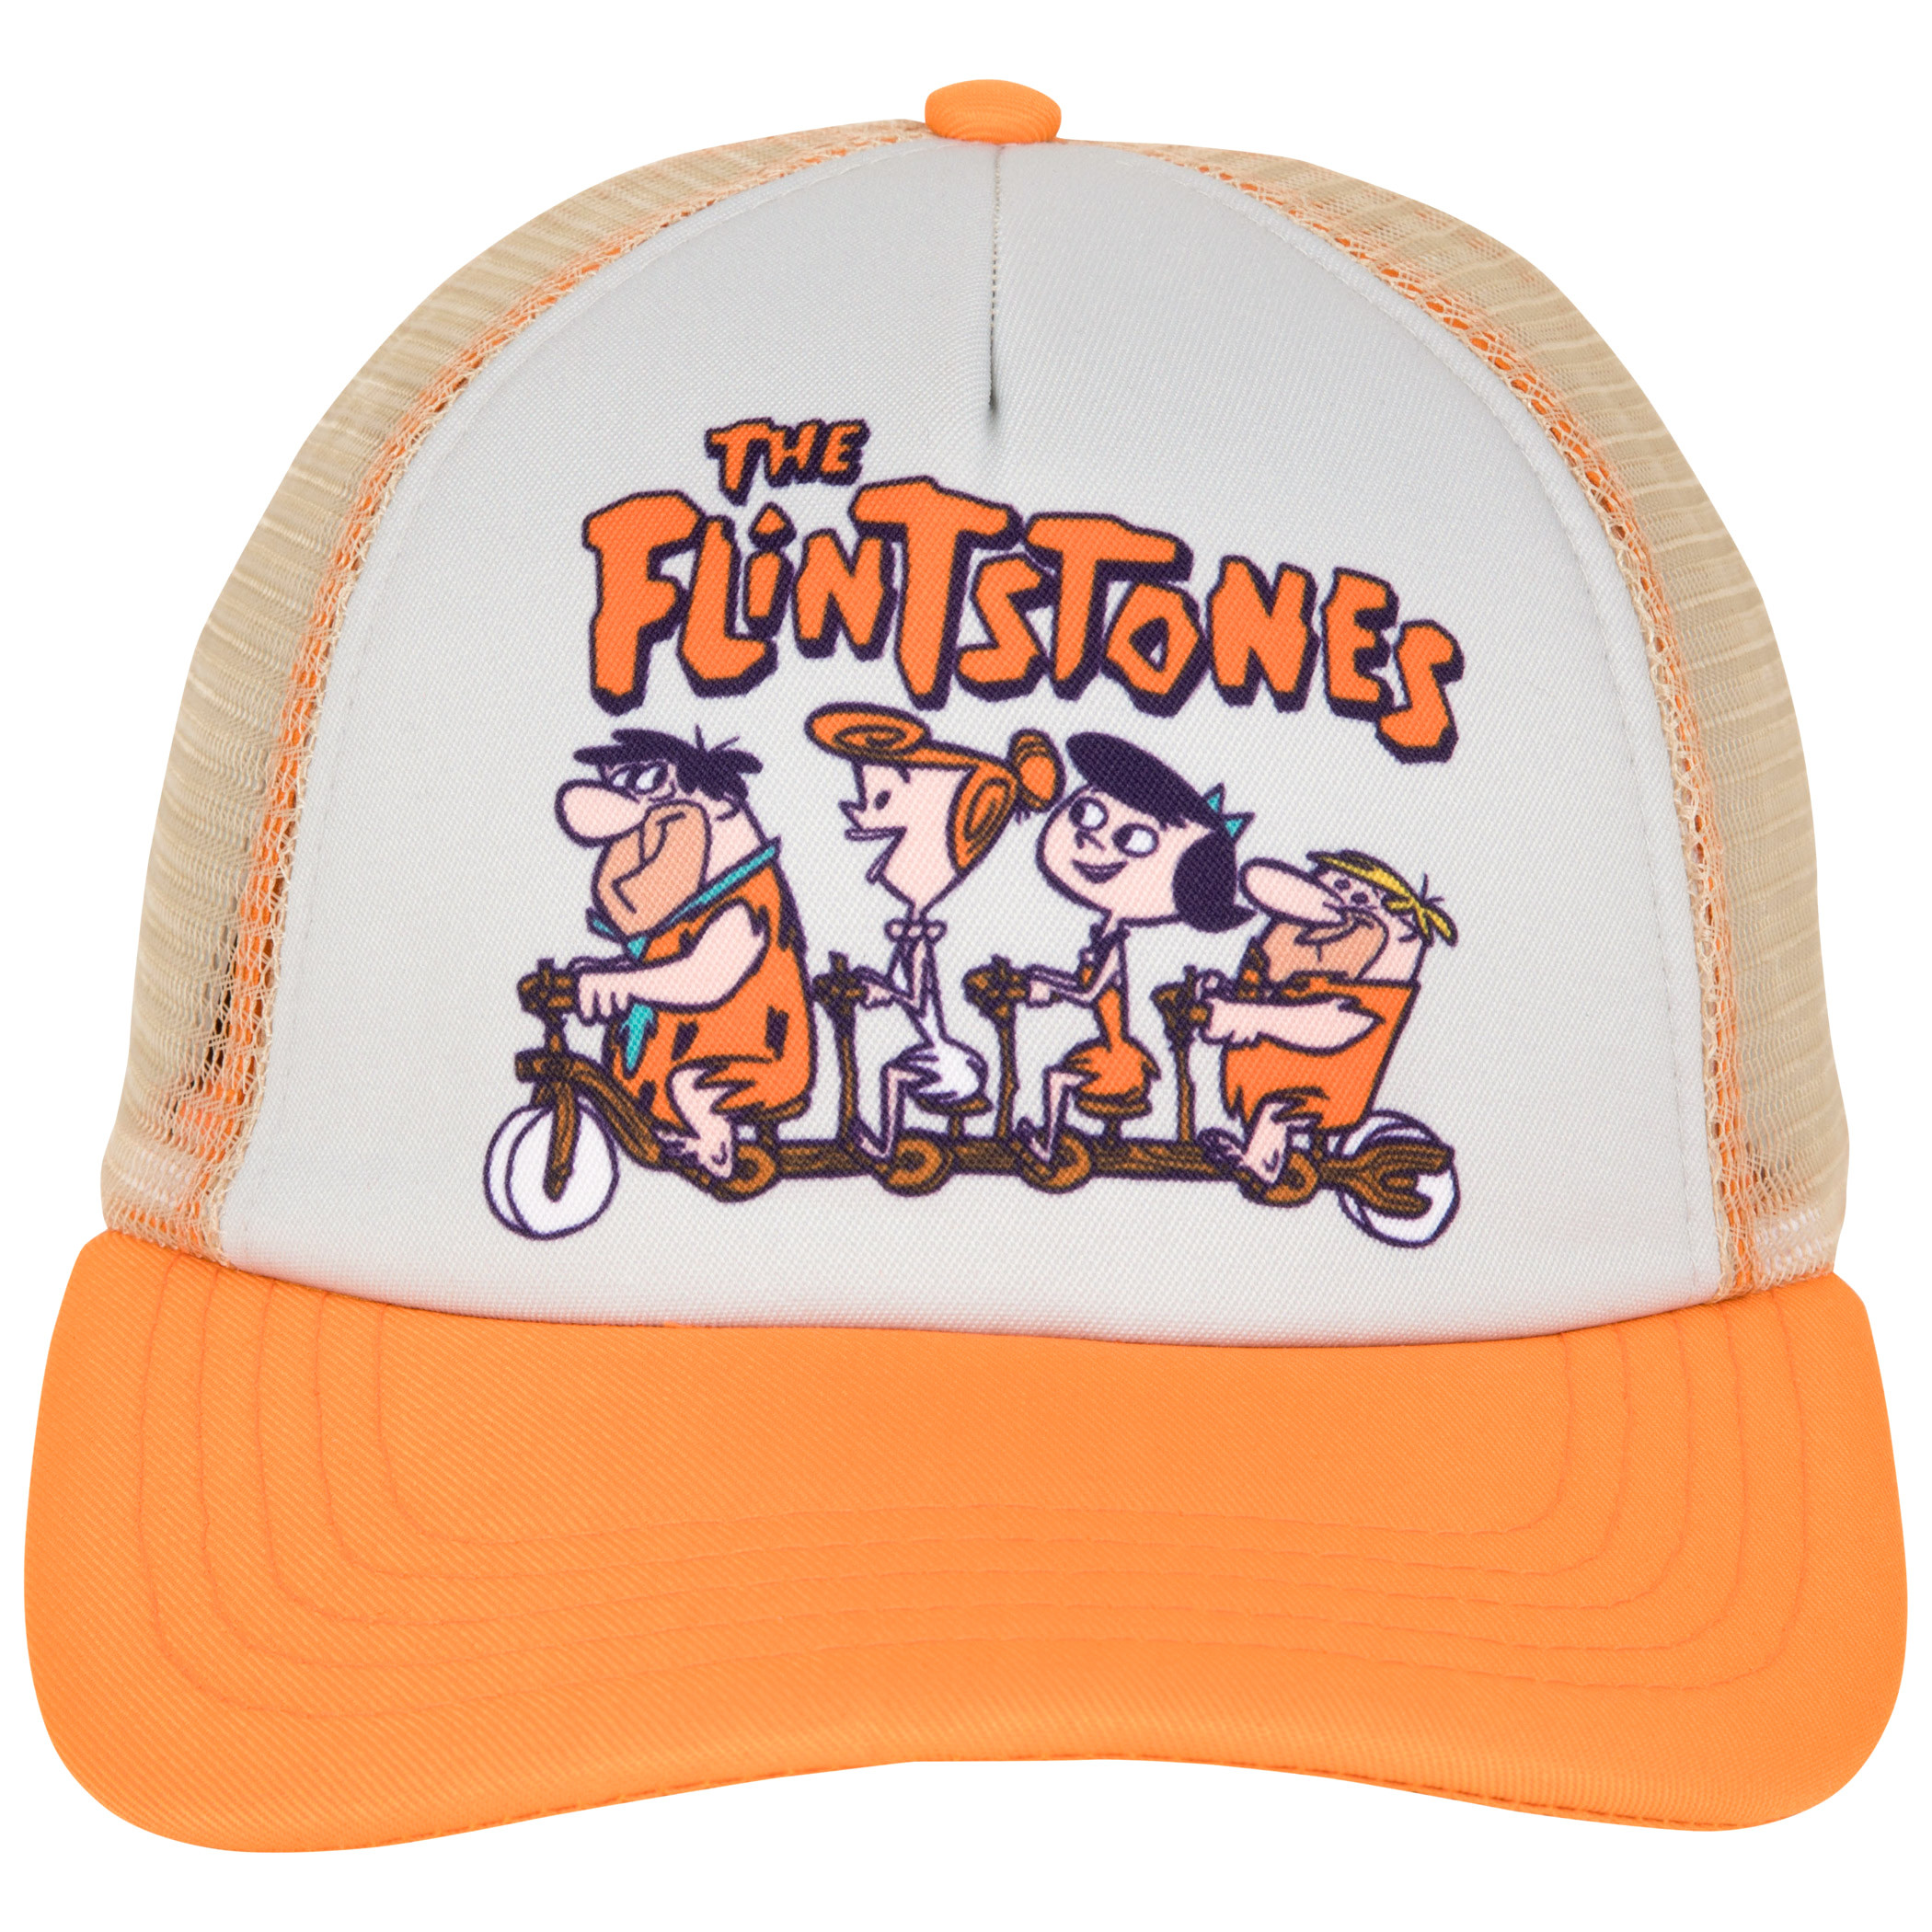 The Flintstones Family Snapback Trucker Hat